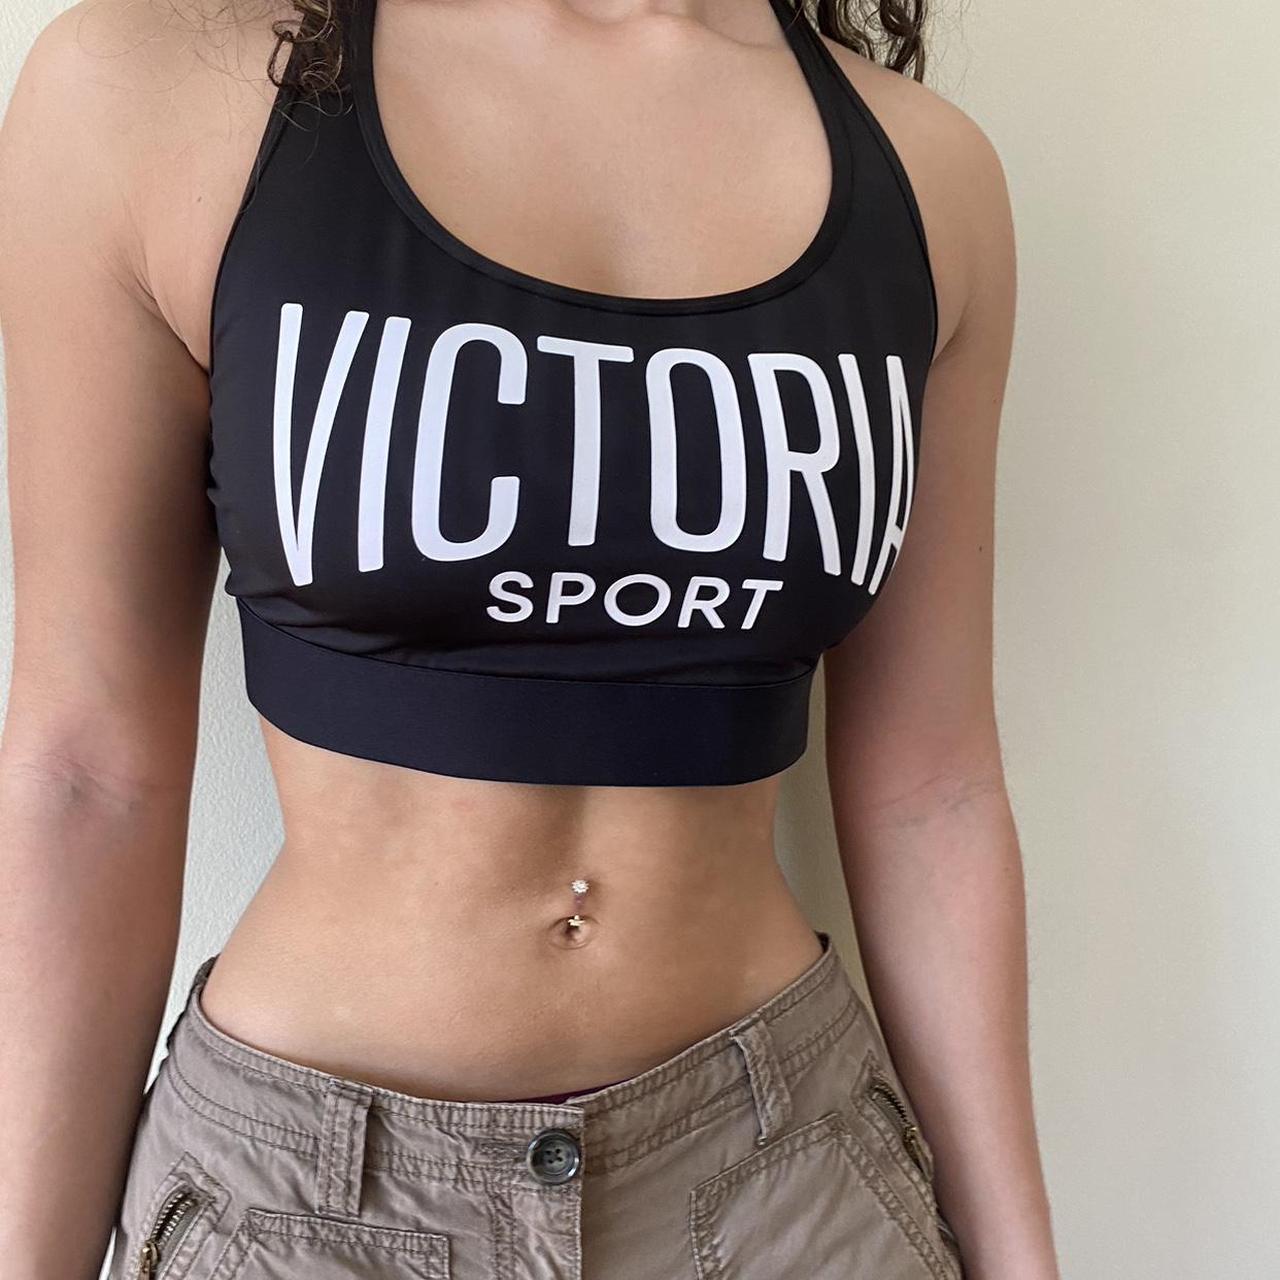 Victoria Sport White Lettering Black Racerback